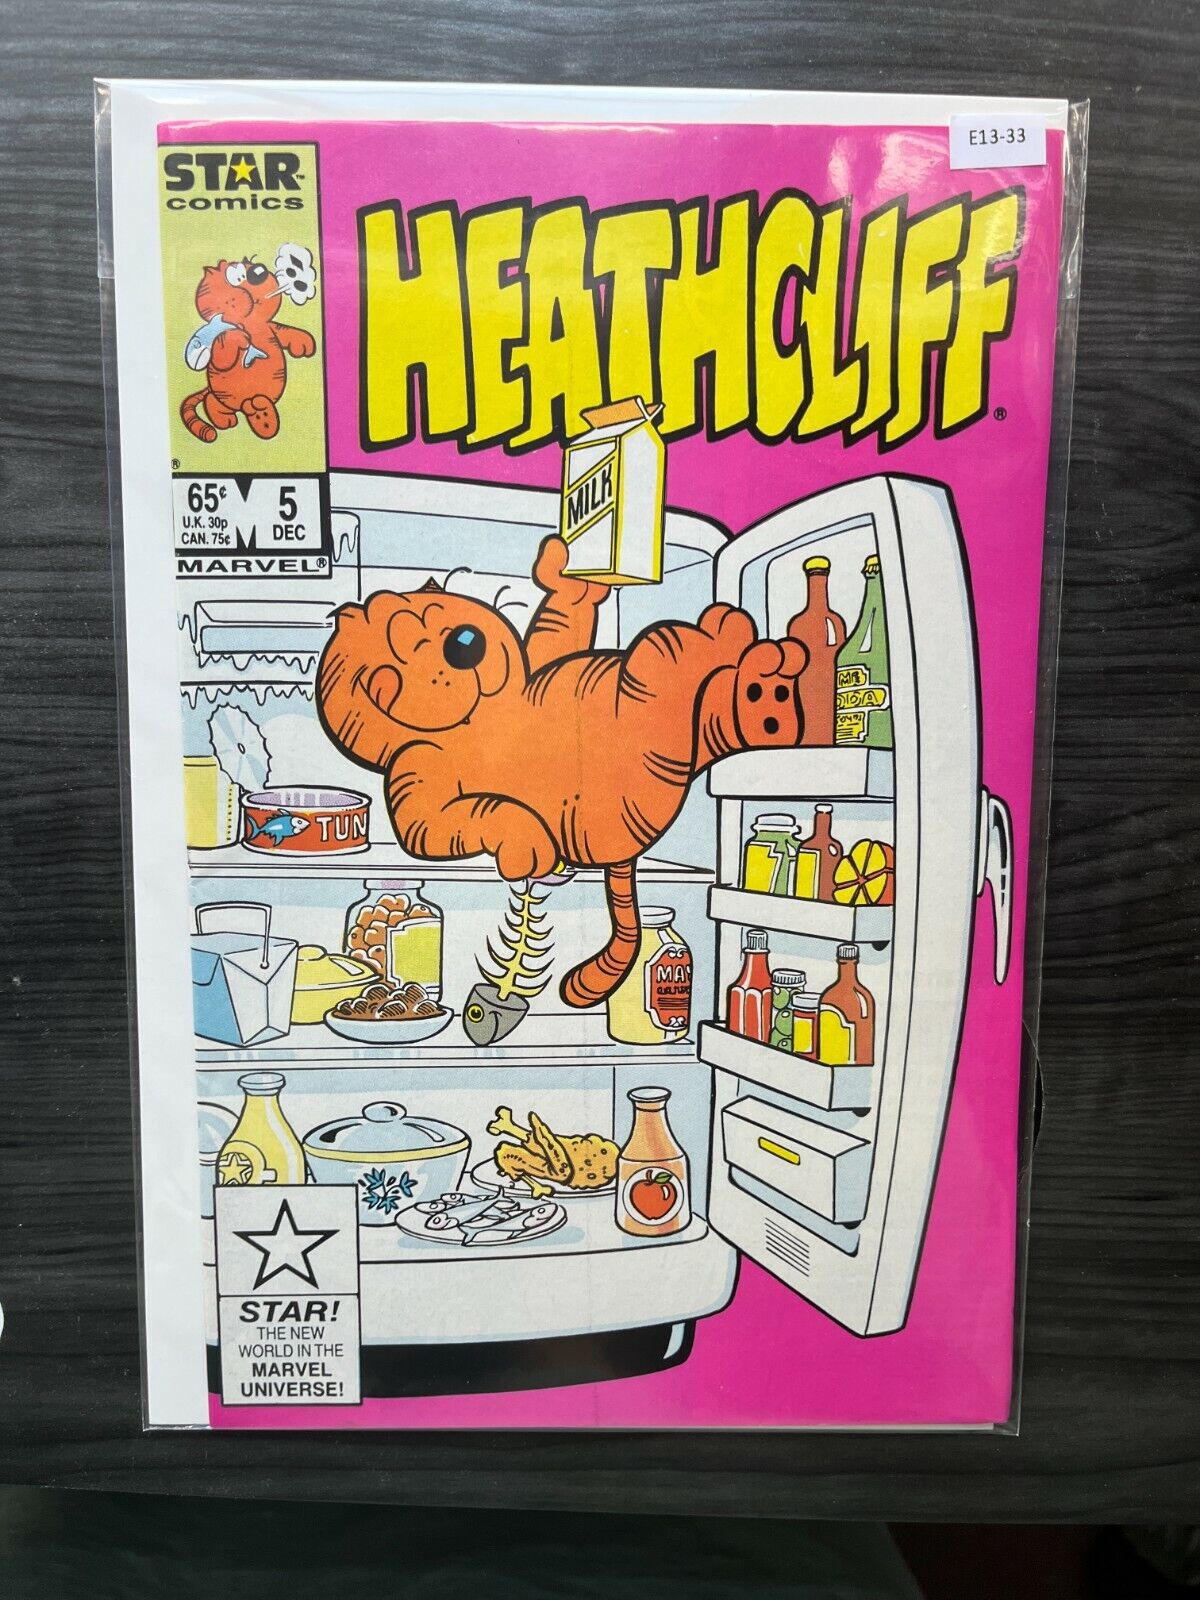 HeathCliff 5 Star Comics  E13-33